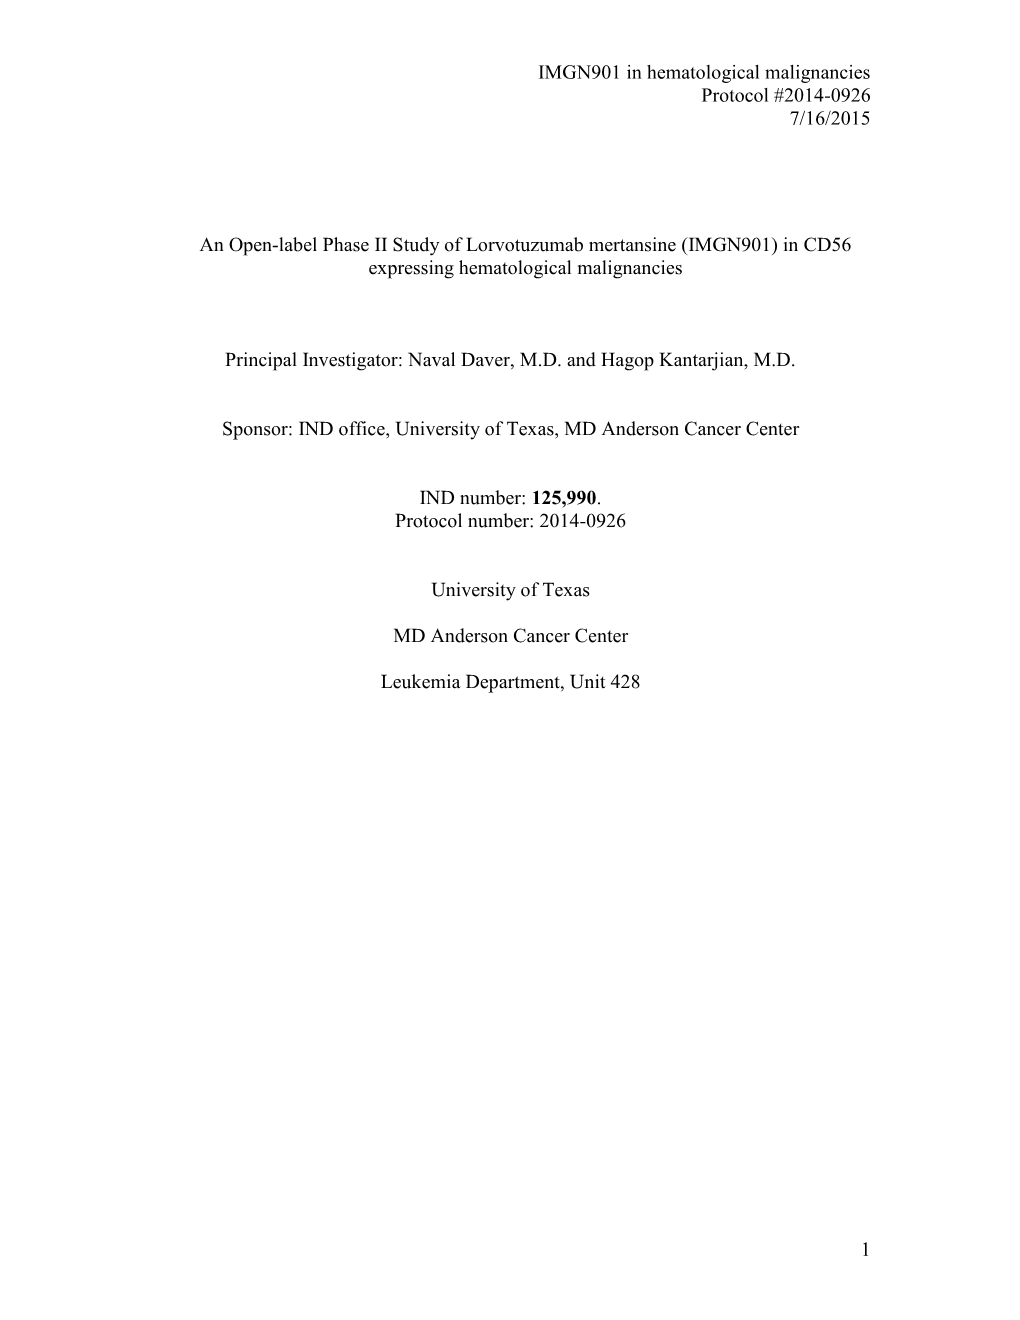 IMGN901 in Hematological Malignancies Protocol #2014-0926 7/16/2015